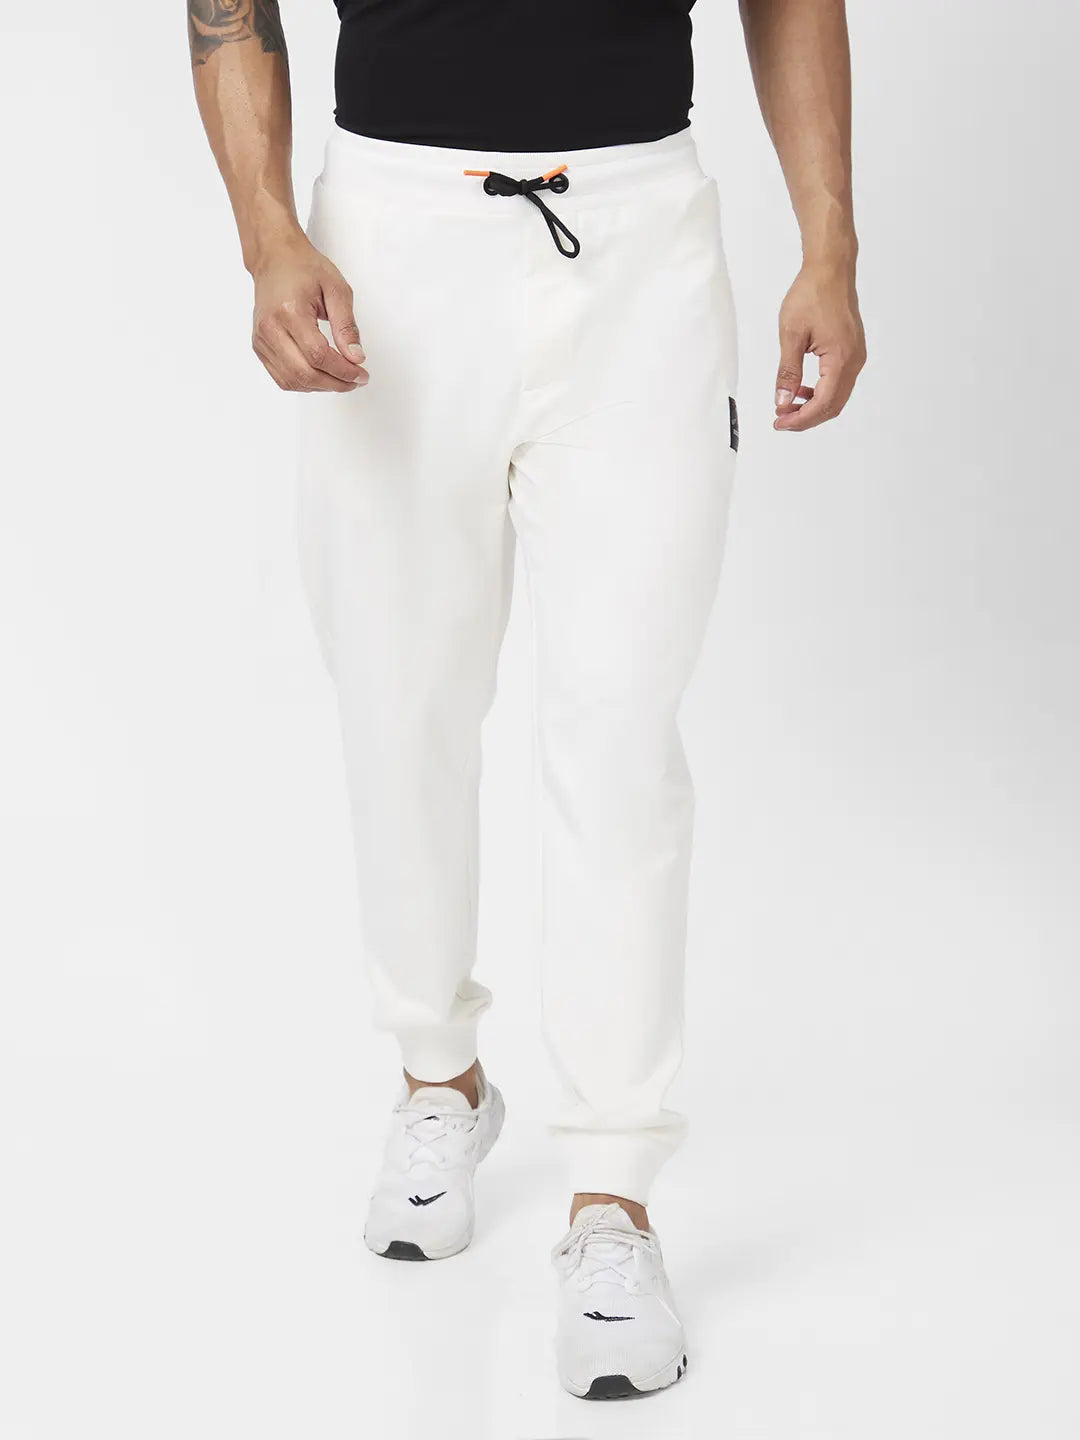 Buy Almo Wear Slim Trousers online - Men - 8 products | FASHIOLA.in